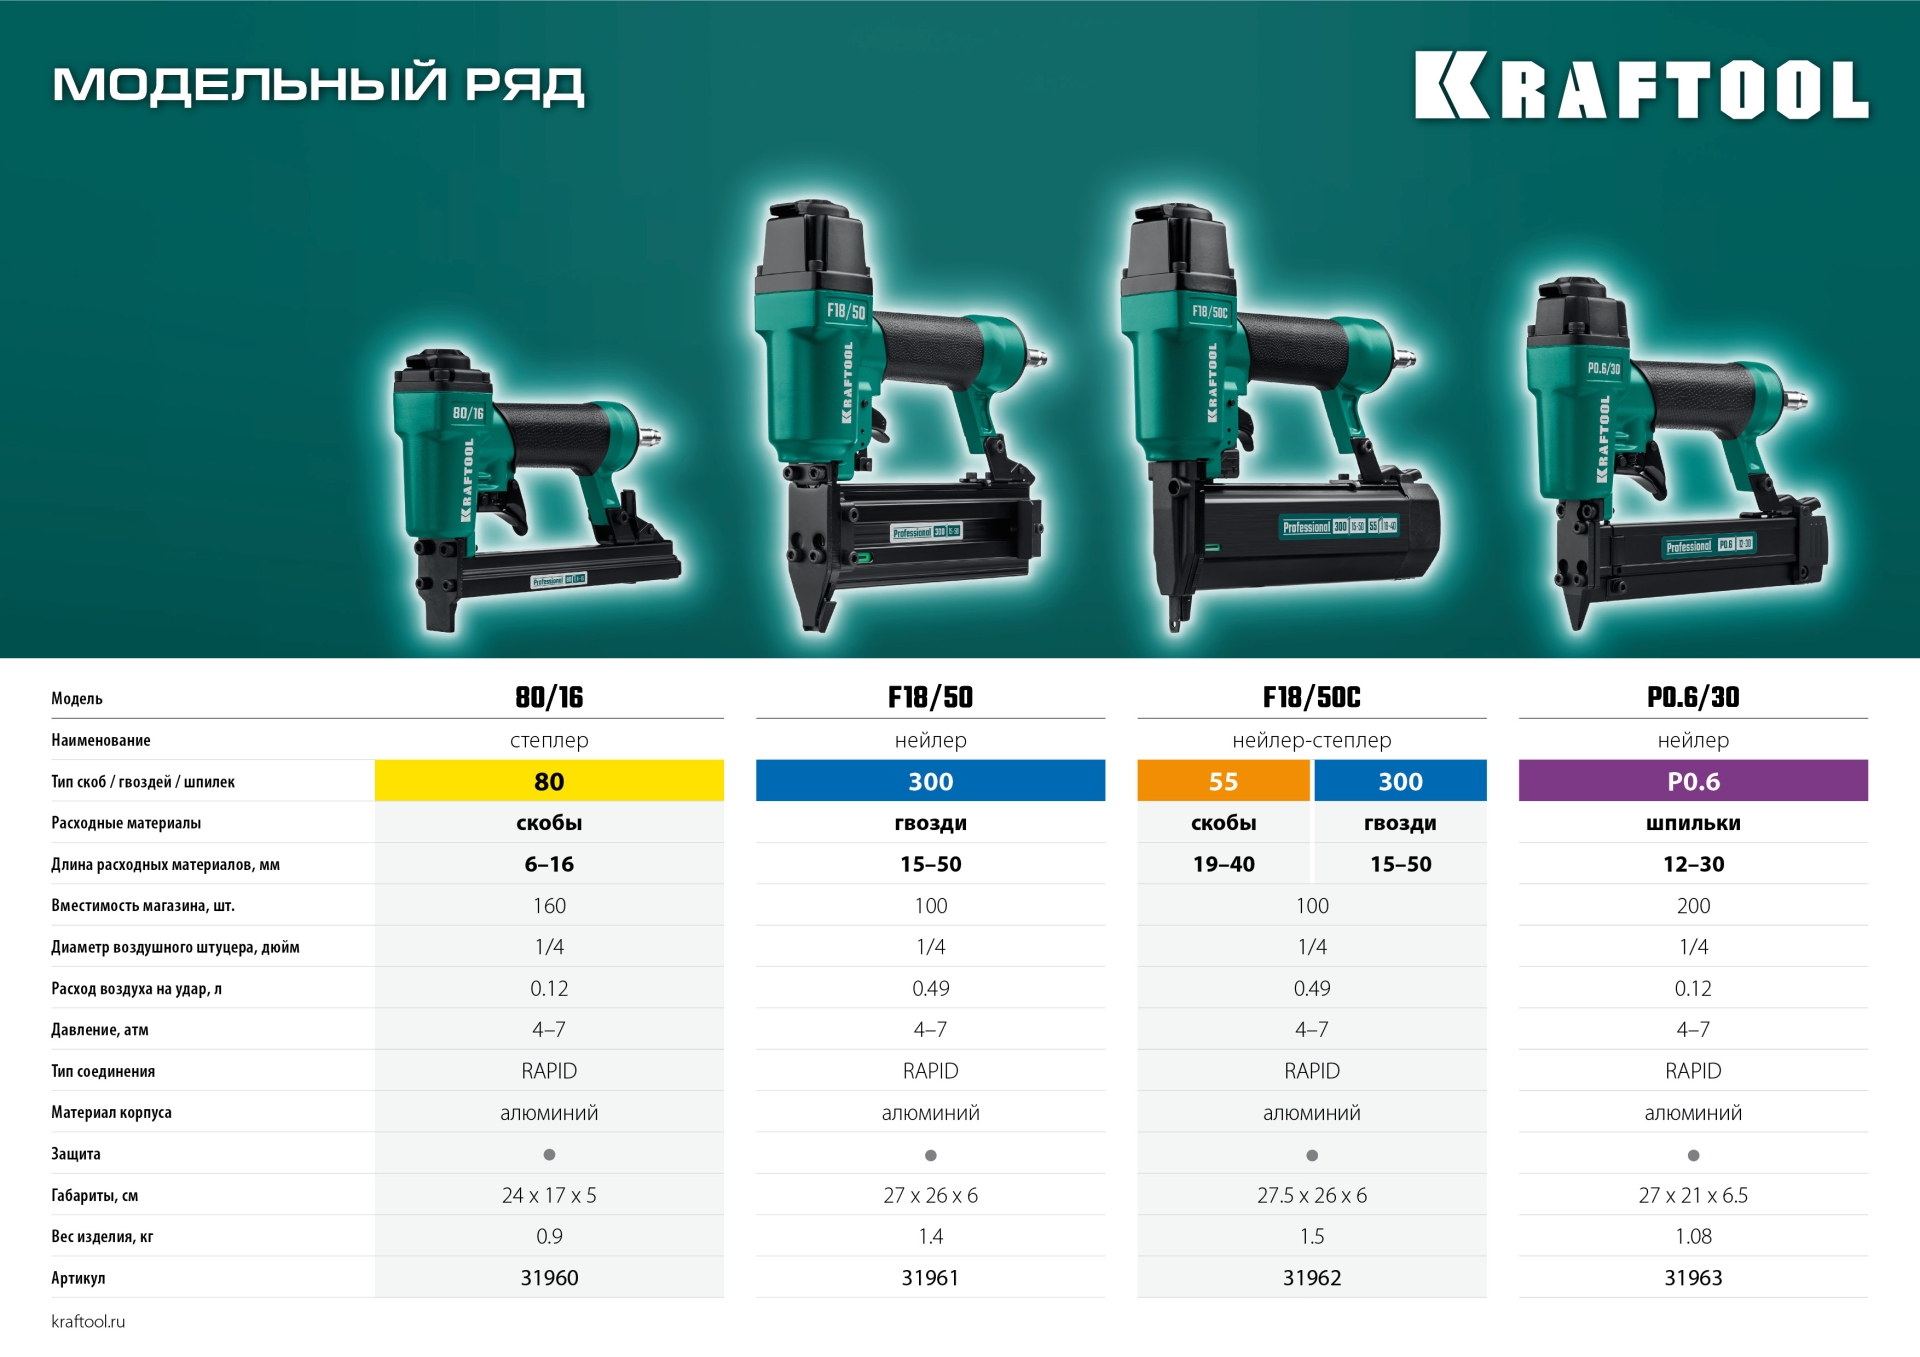 KRAFTOOL P0.6/30 пневматический нейлер для шпилек 23Ga тип P0.6 (12-30 мм), (31963)